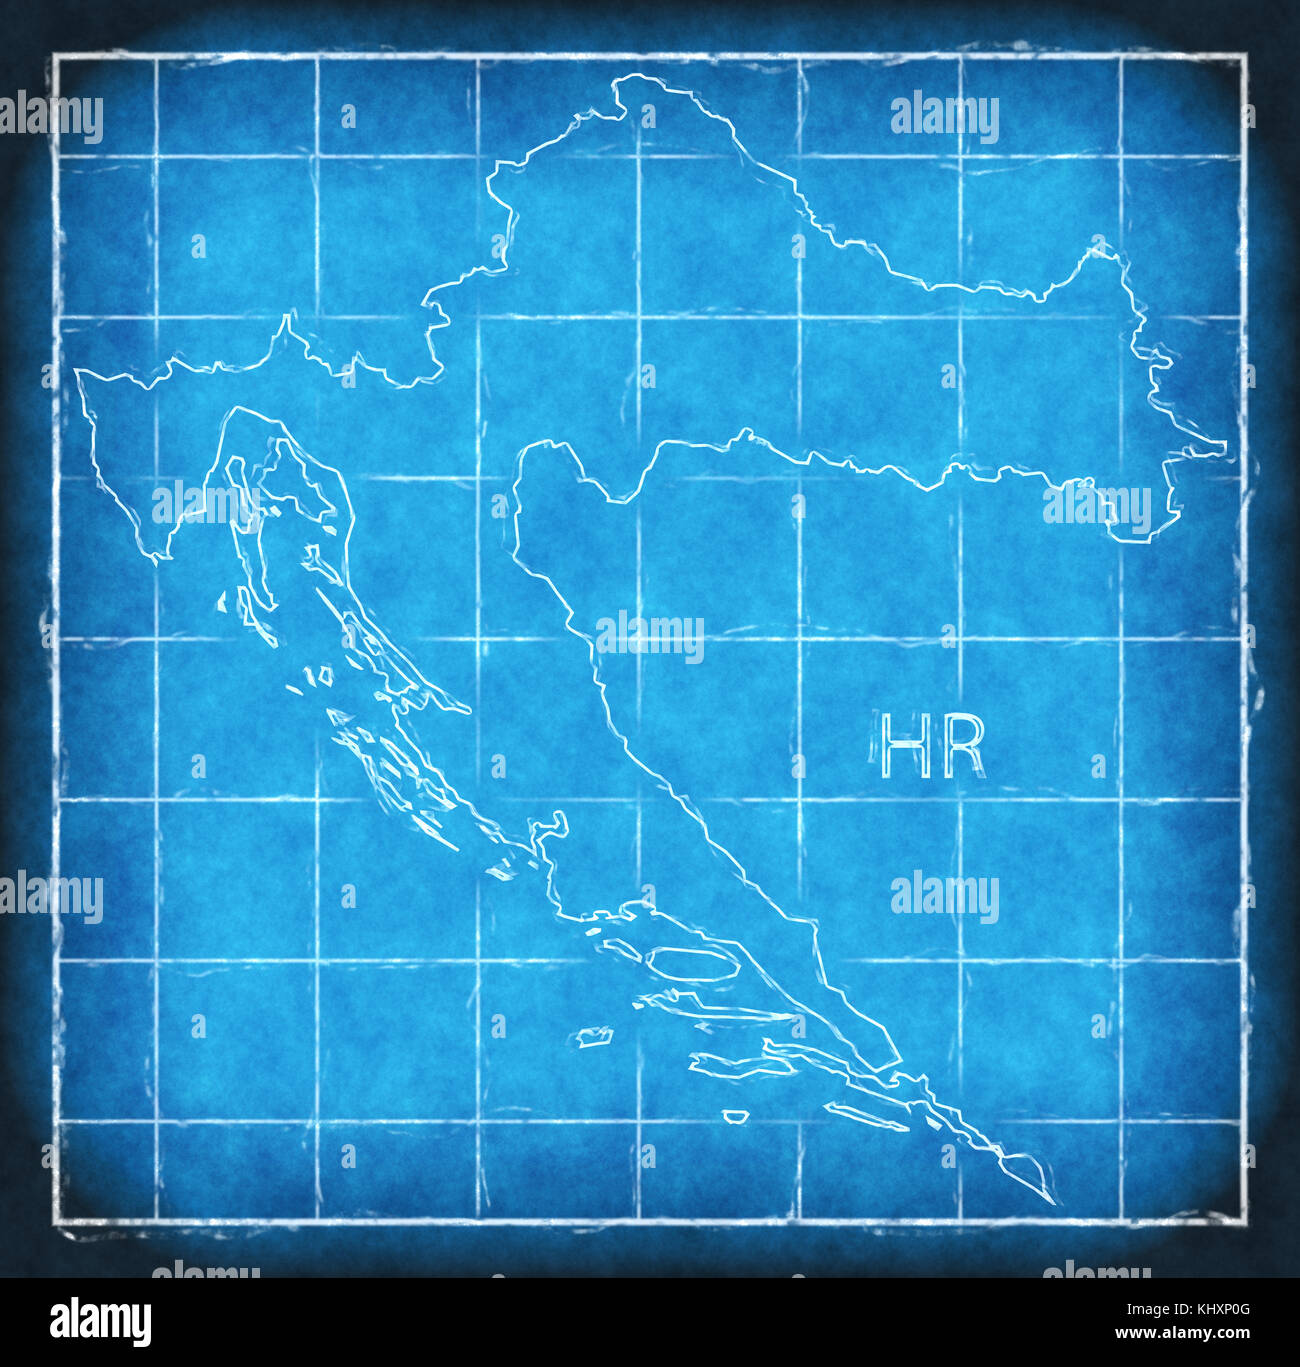 Croatia map blue print artwork illustration silhouette Stock Photo